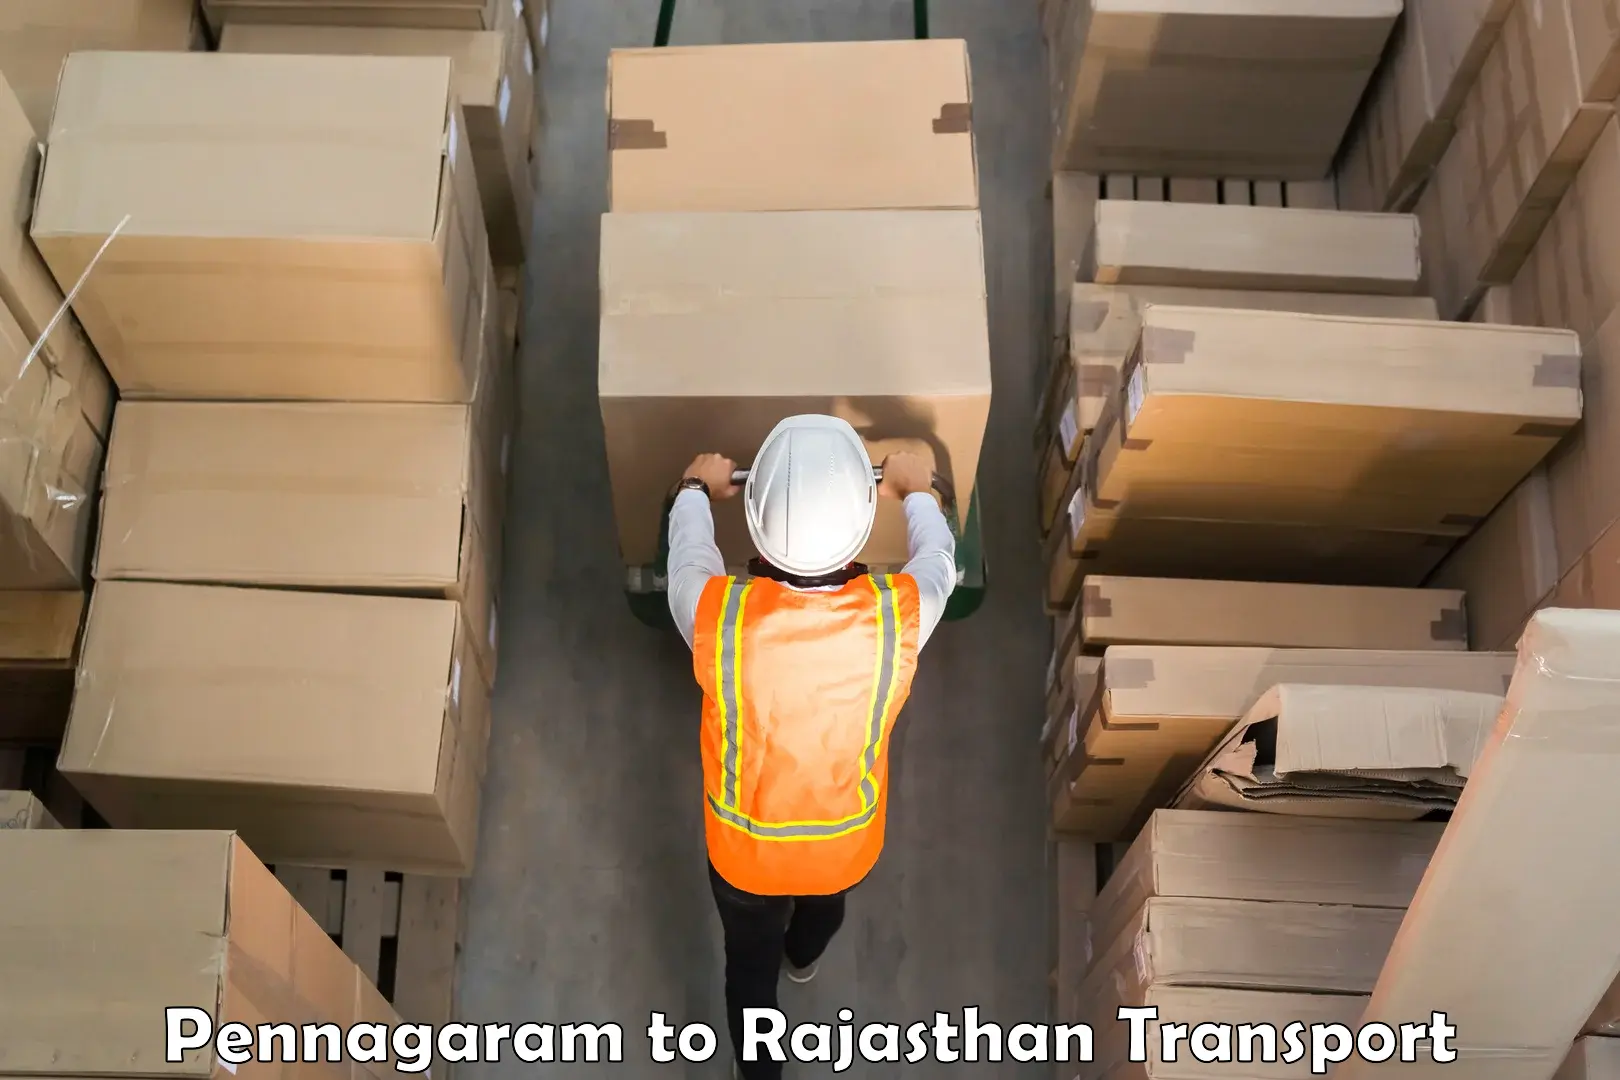 Shipping partner Pennagaram to Ras Pali